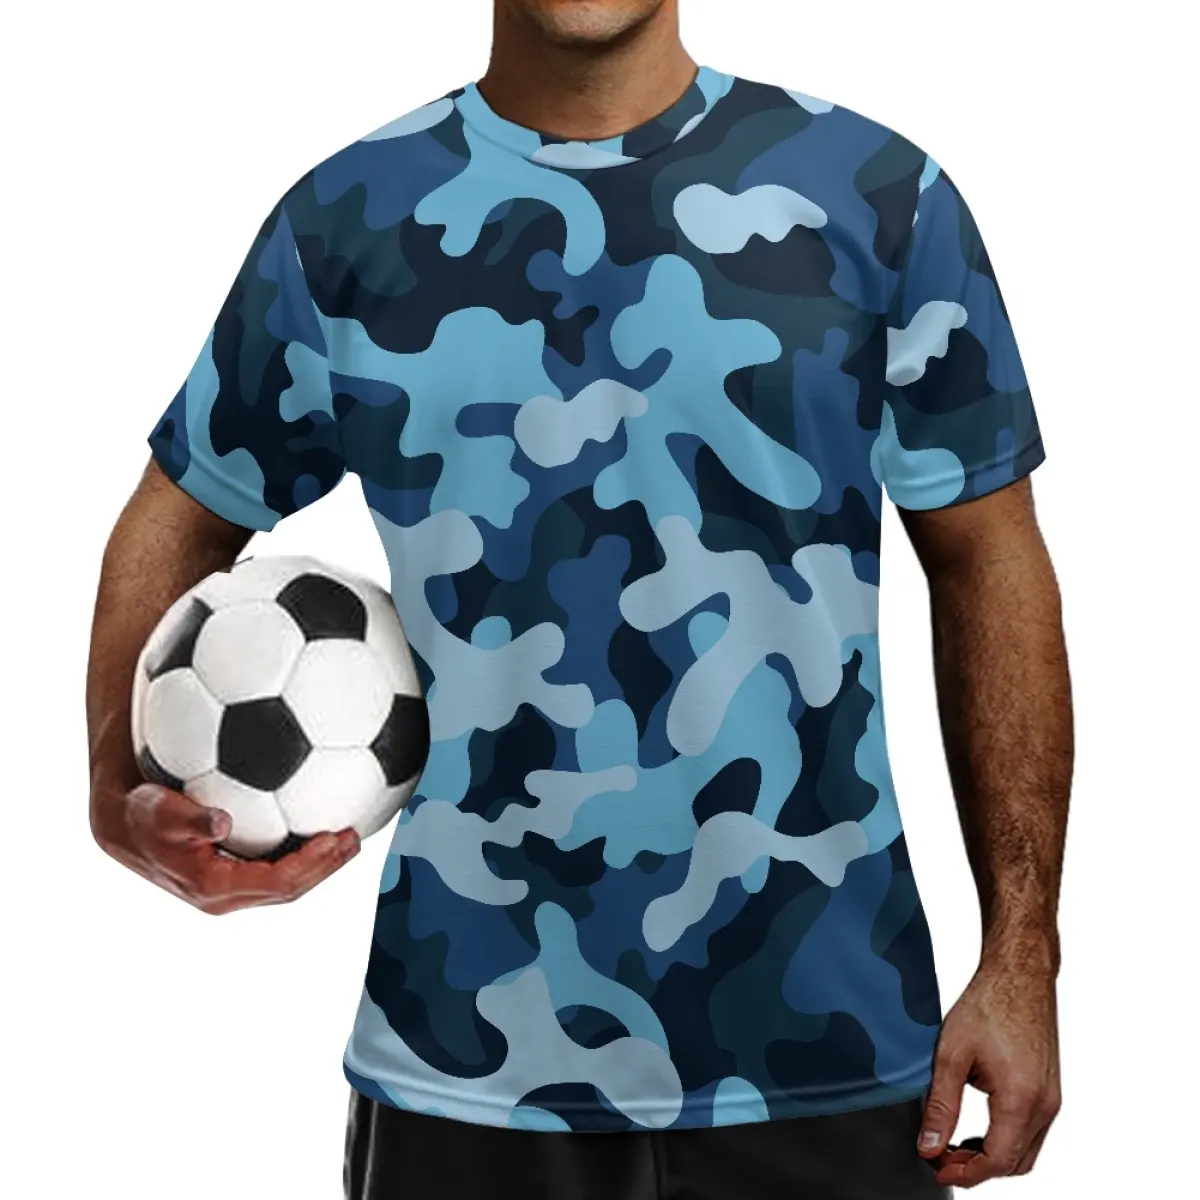 Football Practice Jersey Short Sleeve Camouflage Printing Football Jersey Custom Design Print On Demand Football Uniform soccer